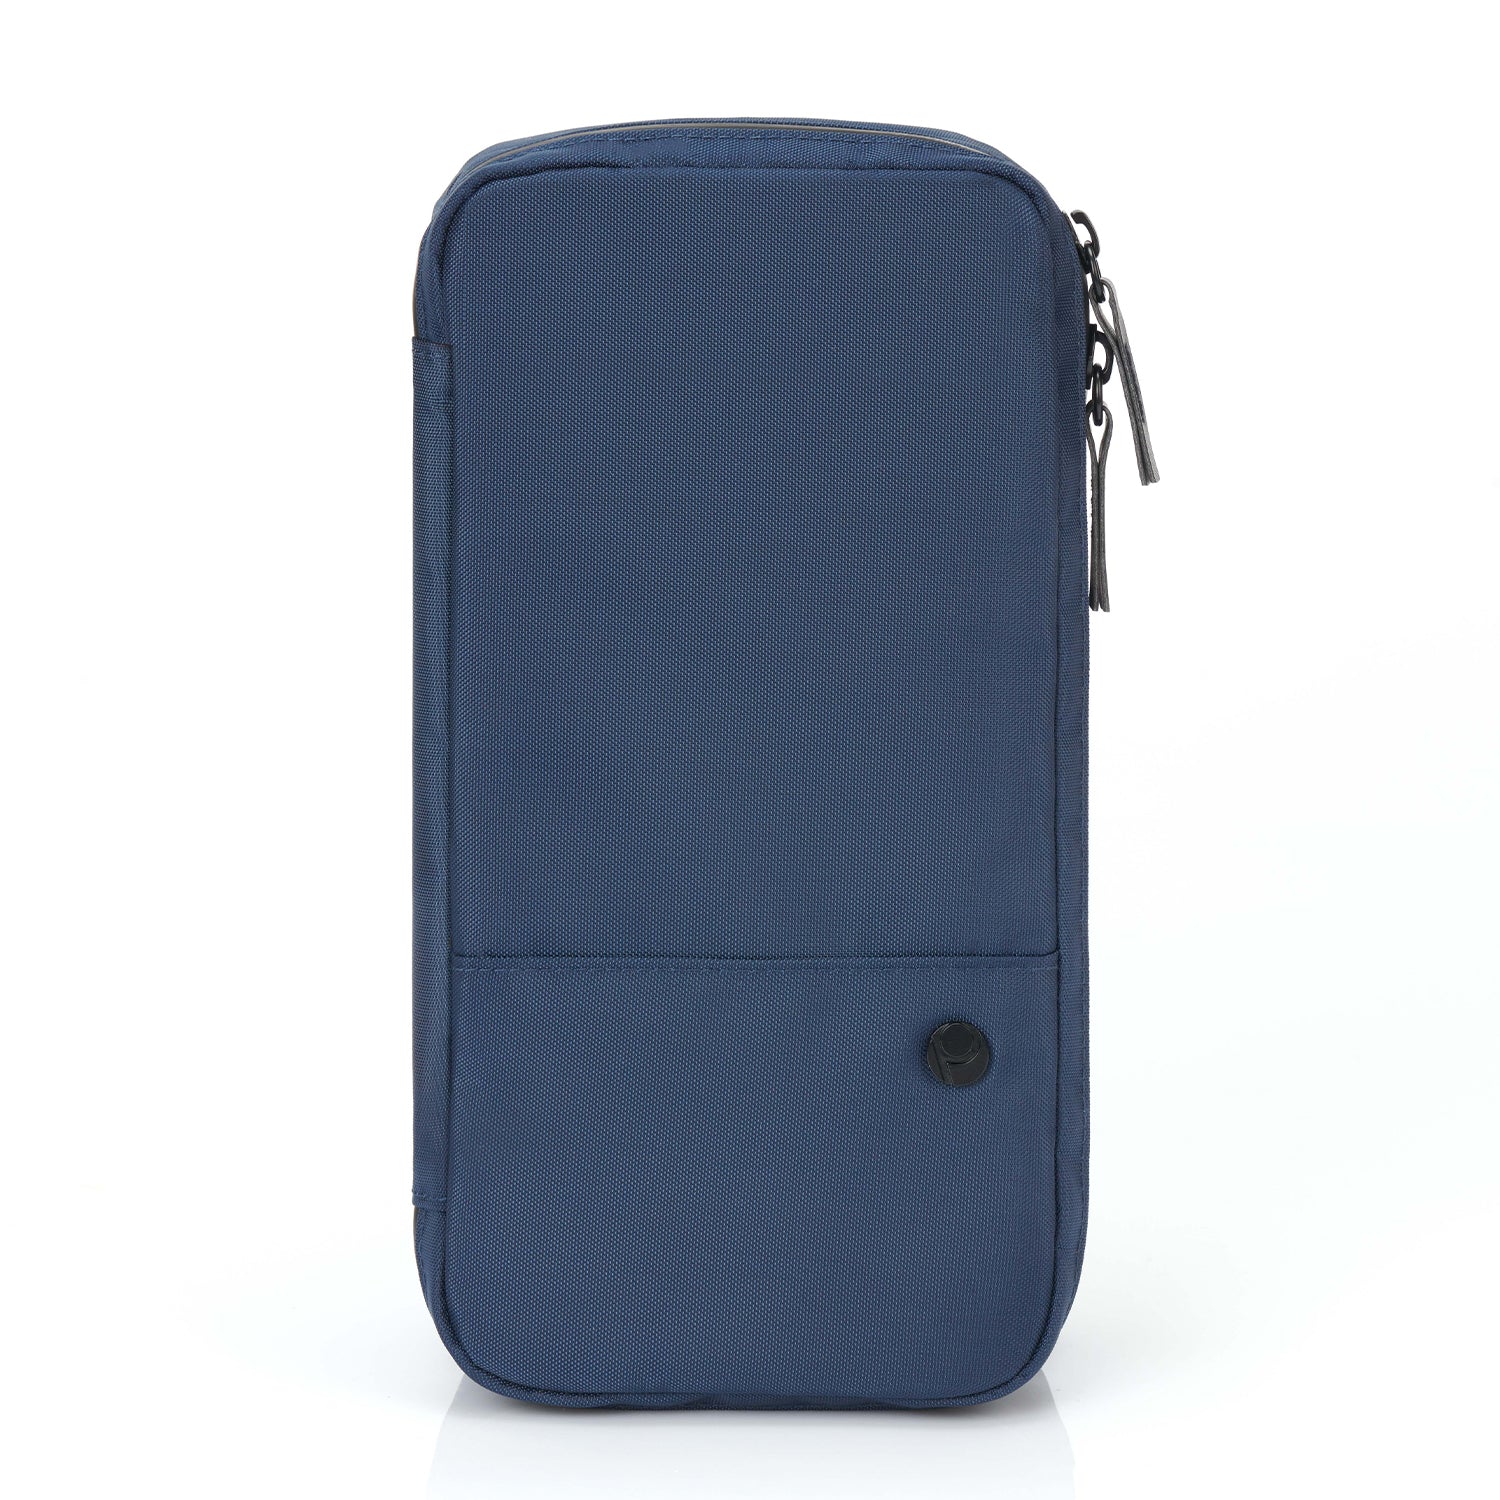 Mens Travel Toiletry Bag, Compact Haning Dopp Kit and Wash Bag for Men